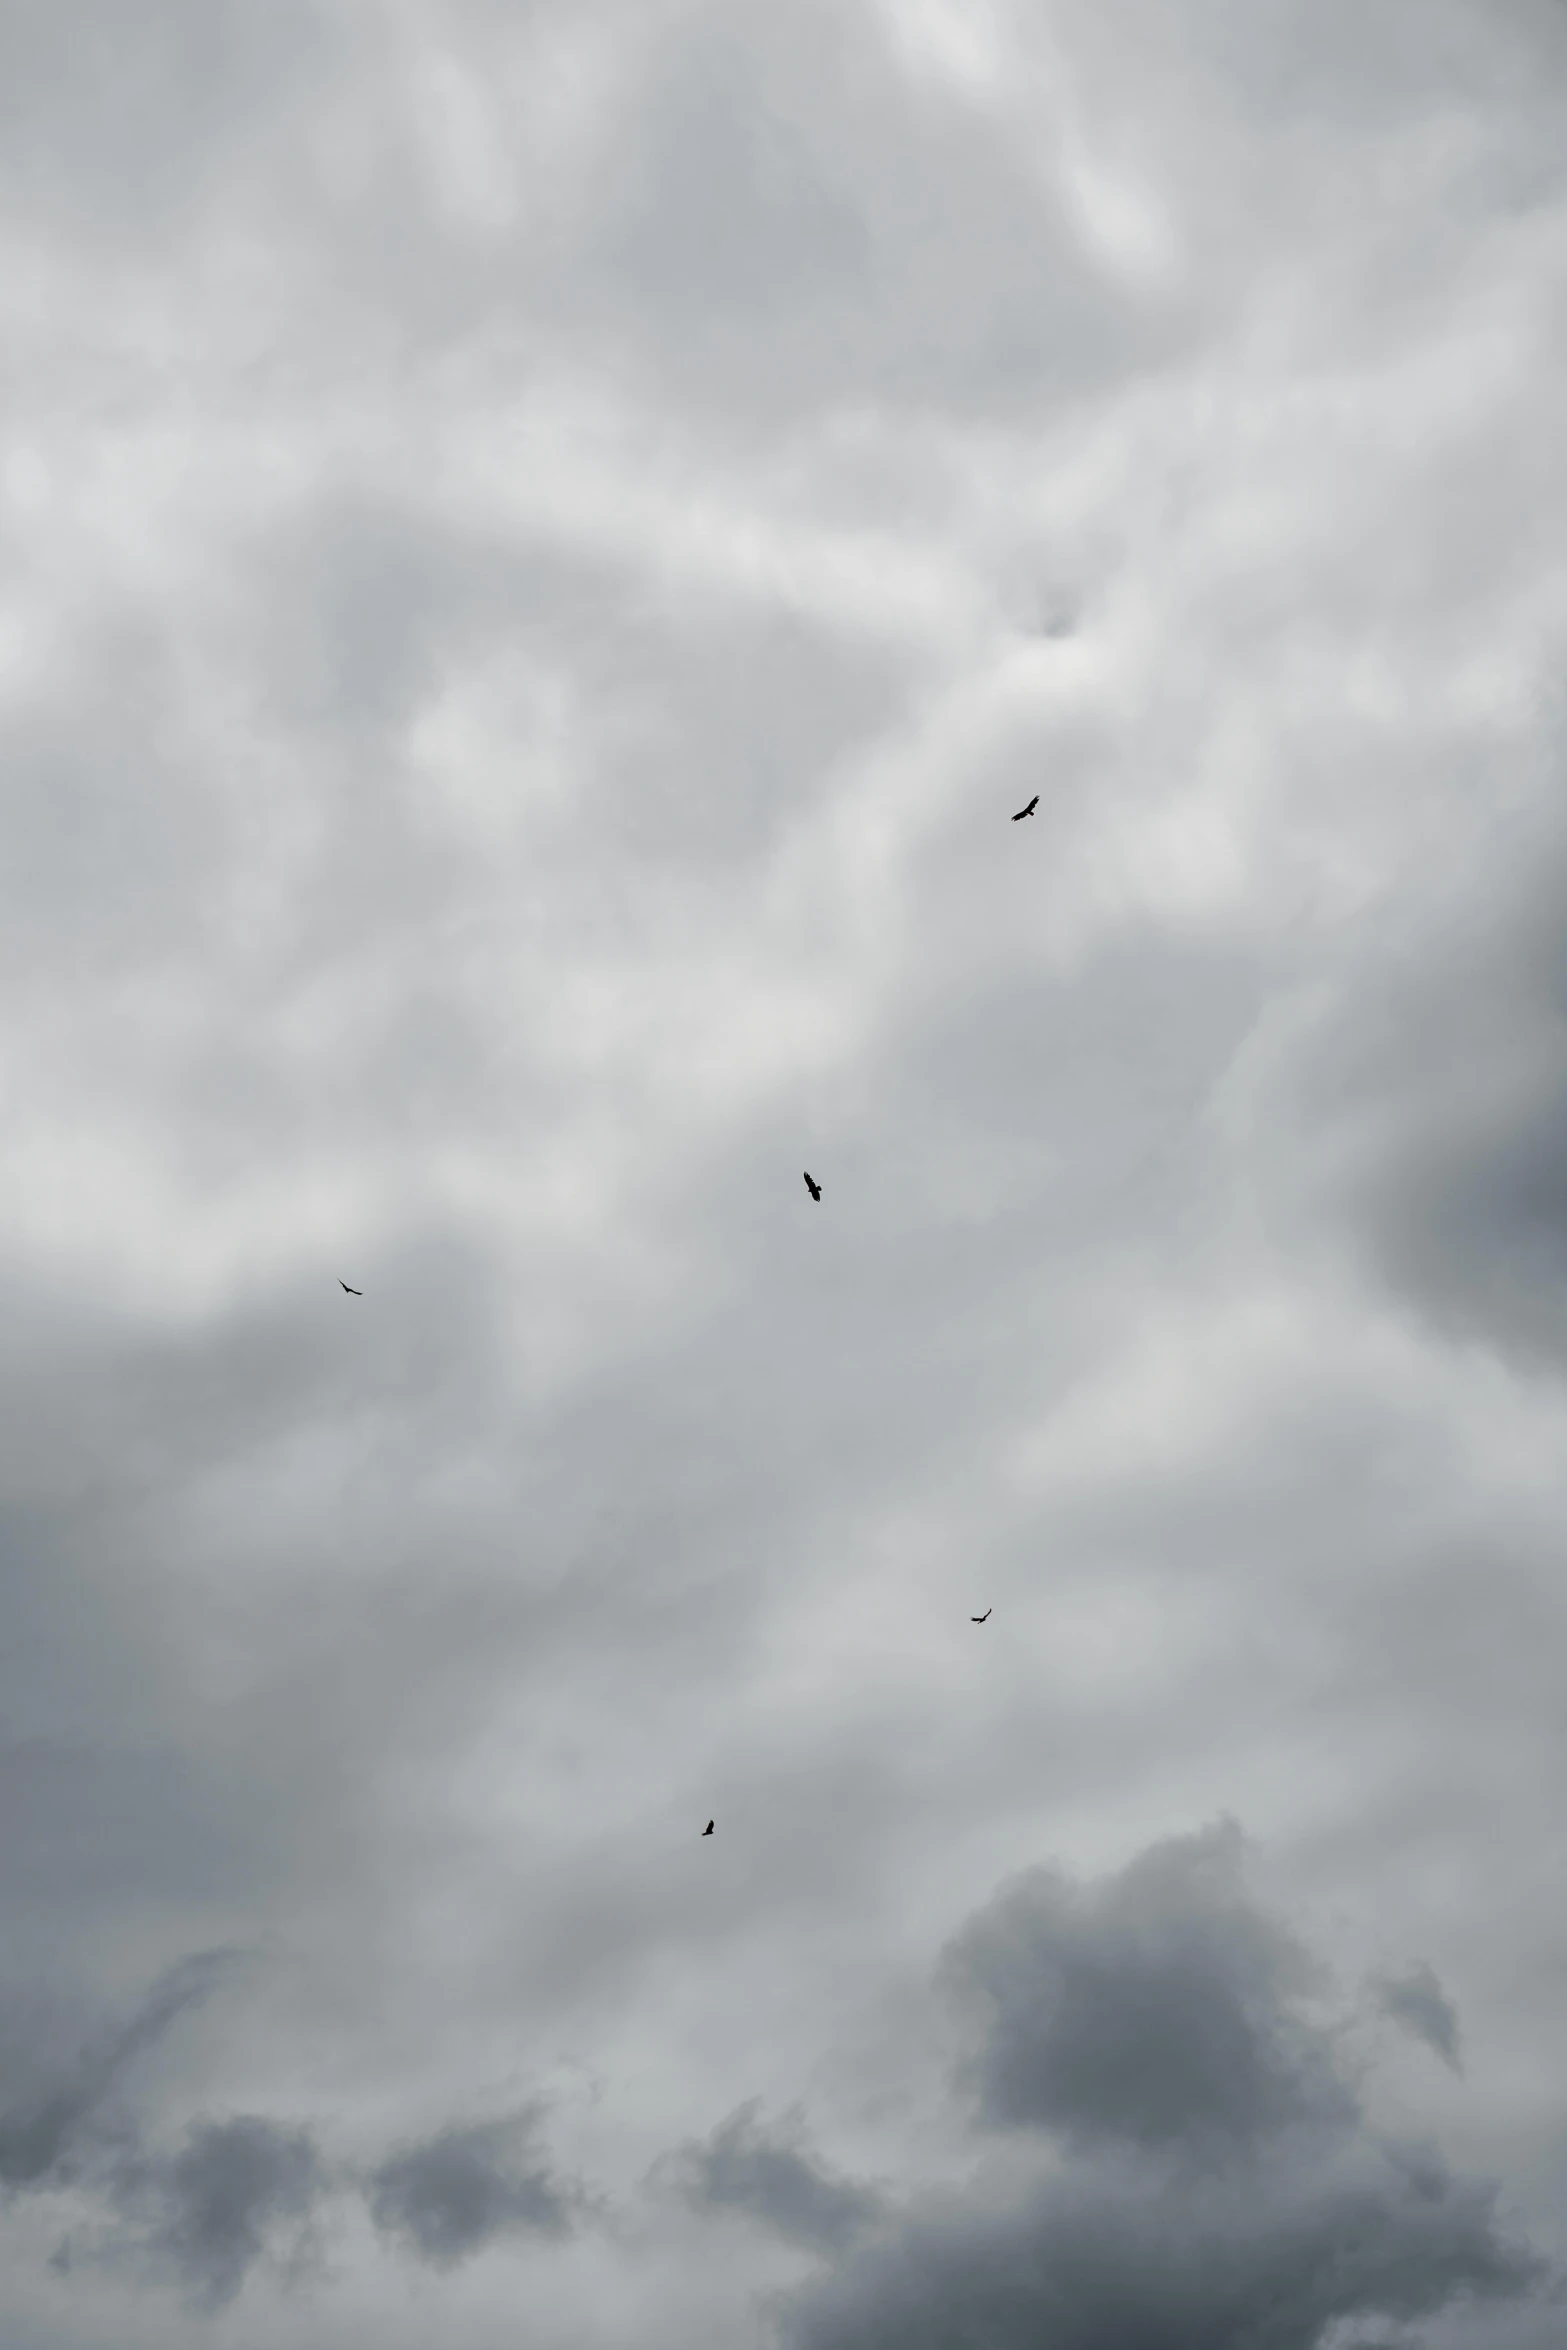 a couple birds fly through the air on cloudy skies